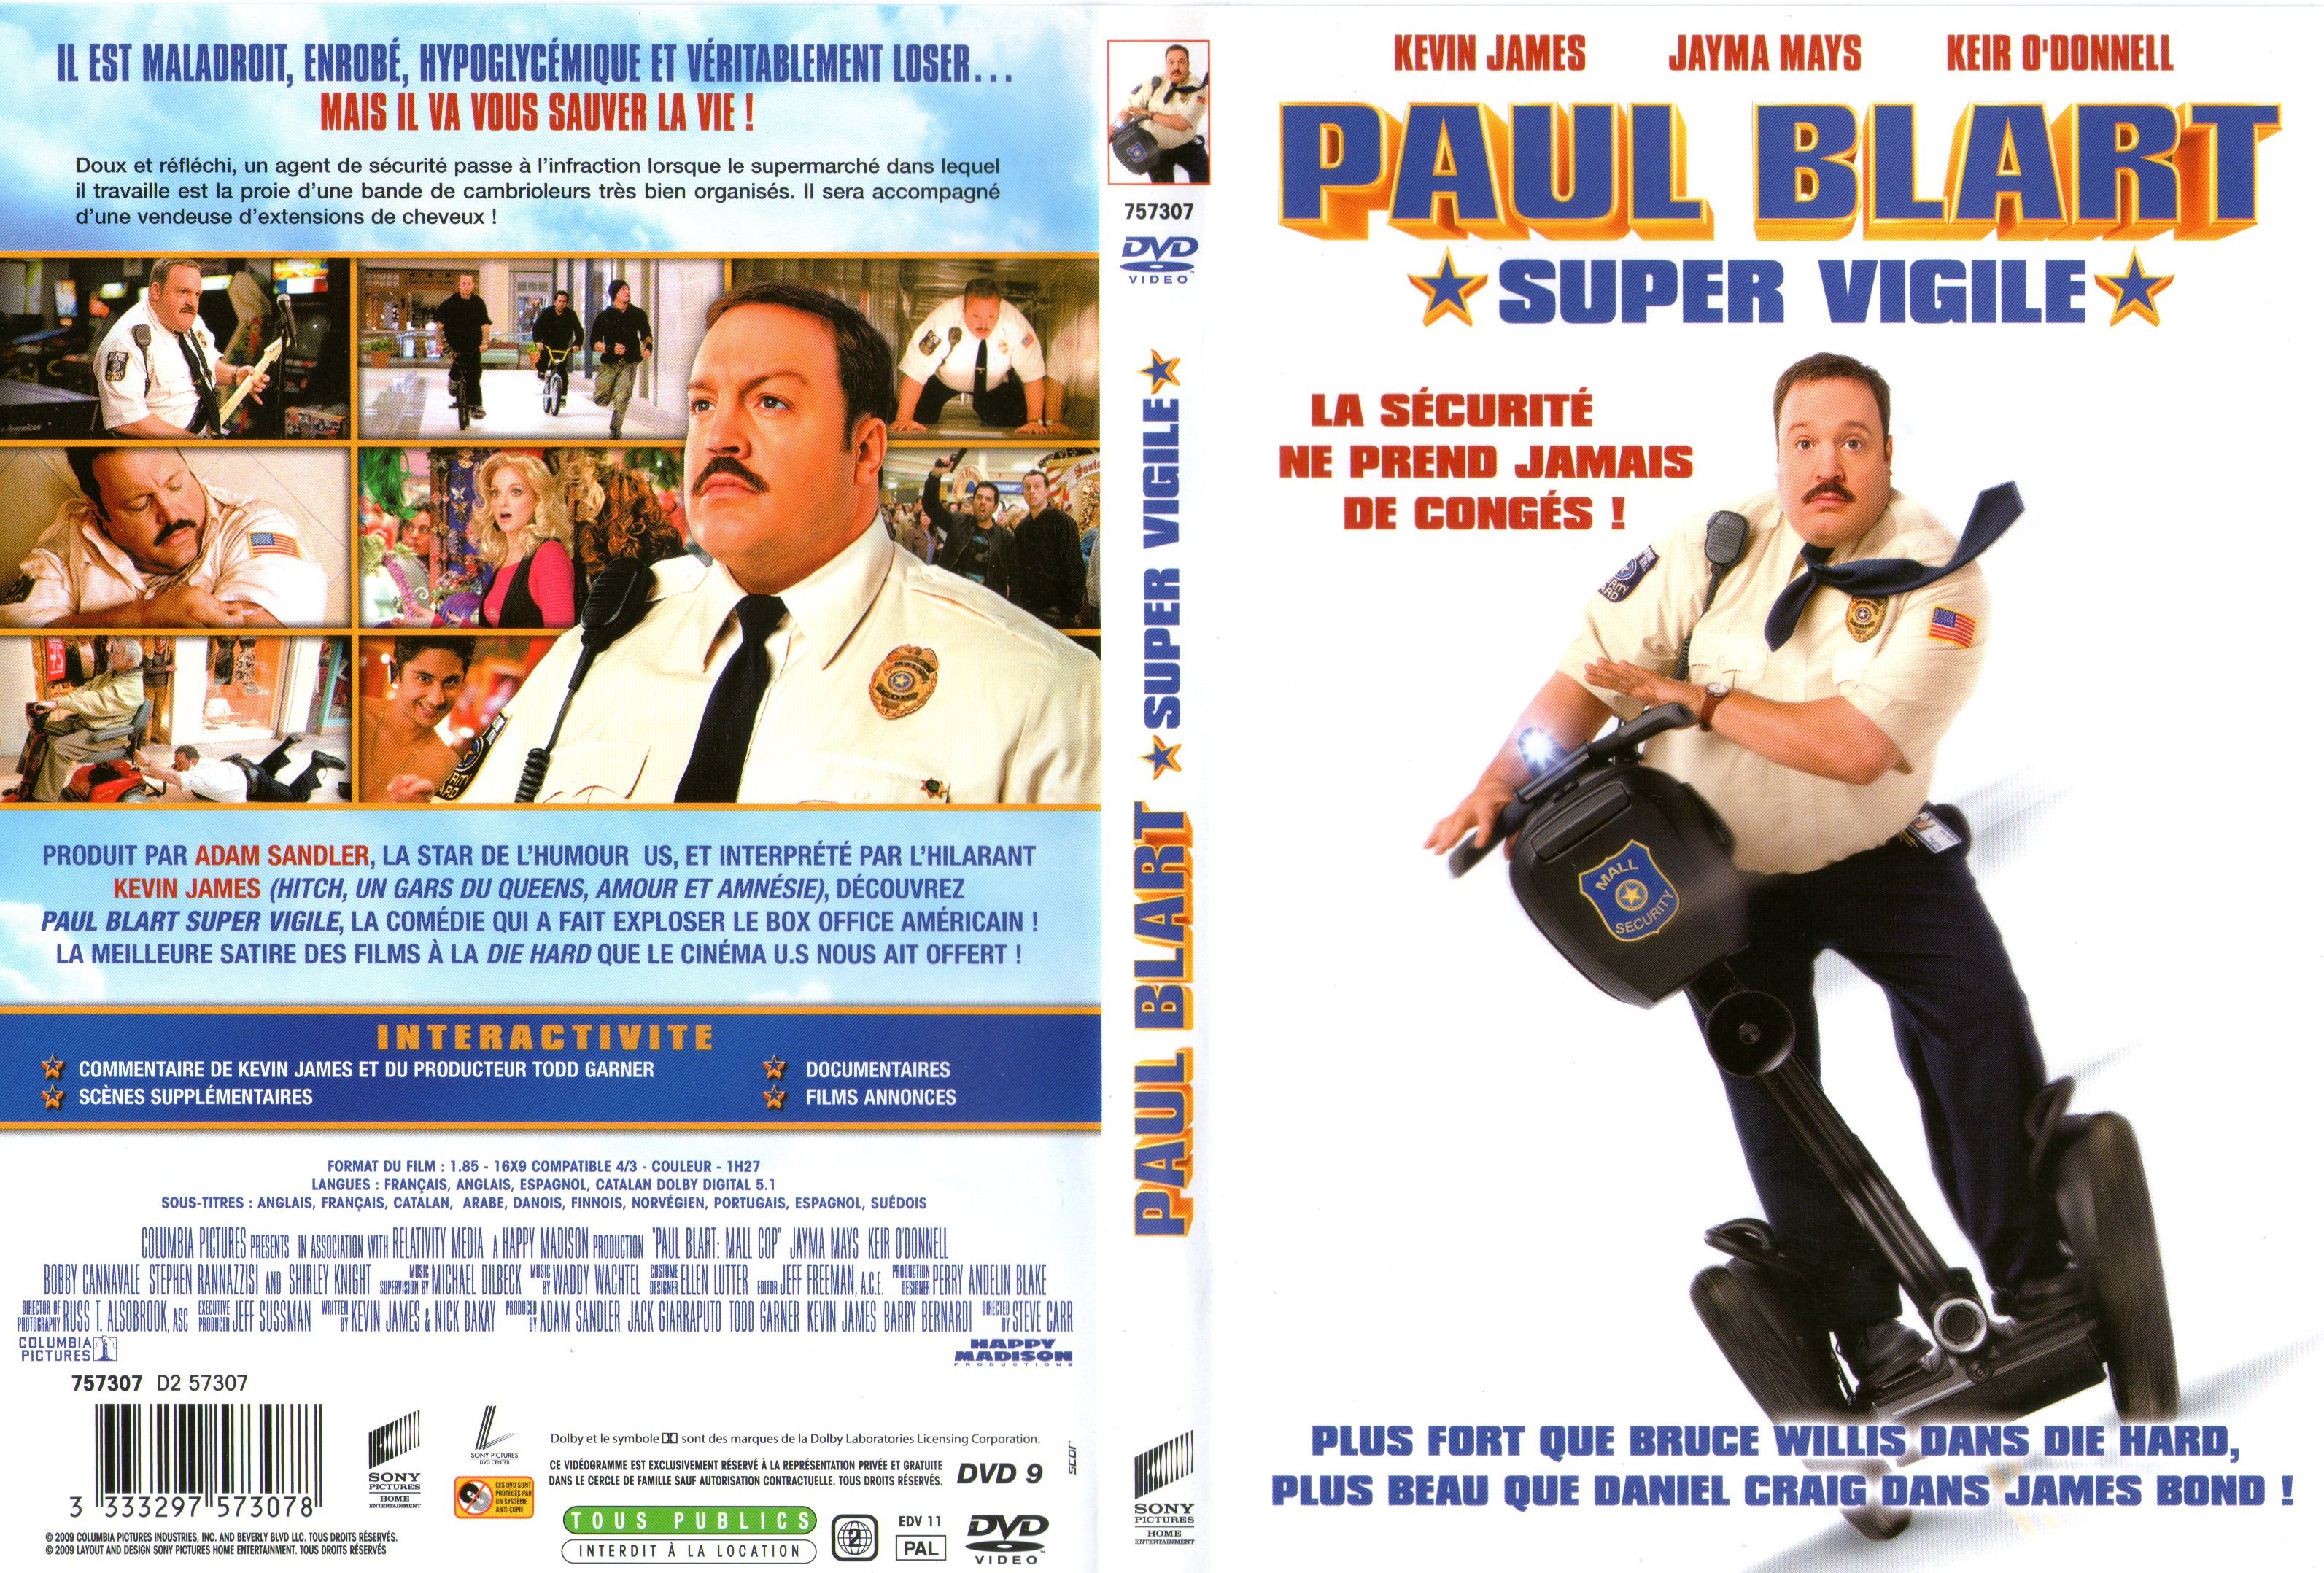 Jaquette DVD Paul Blart super vigile